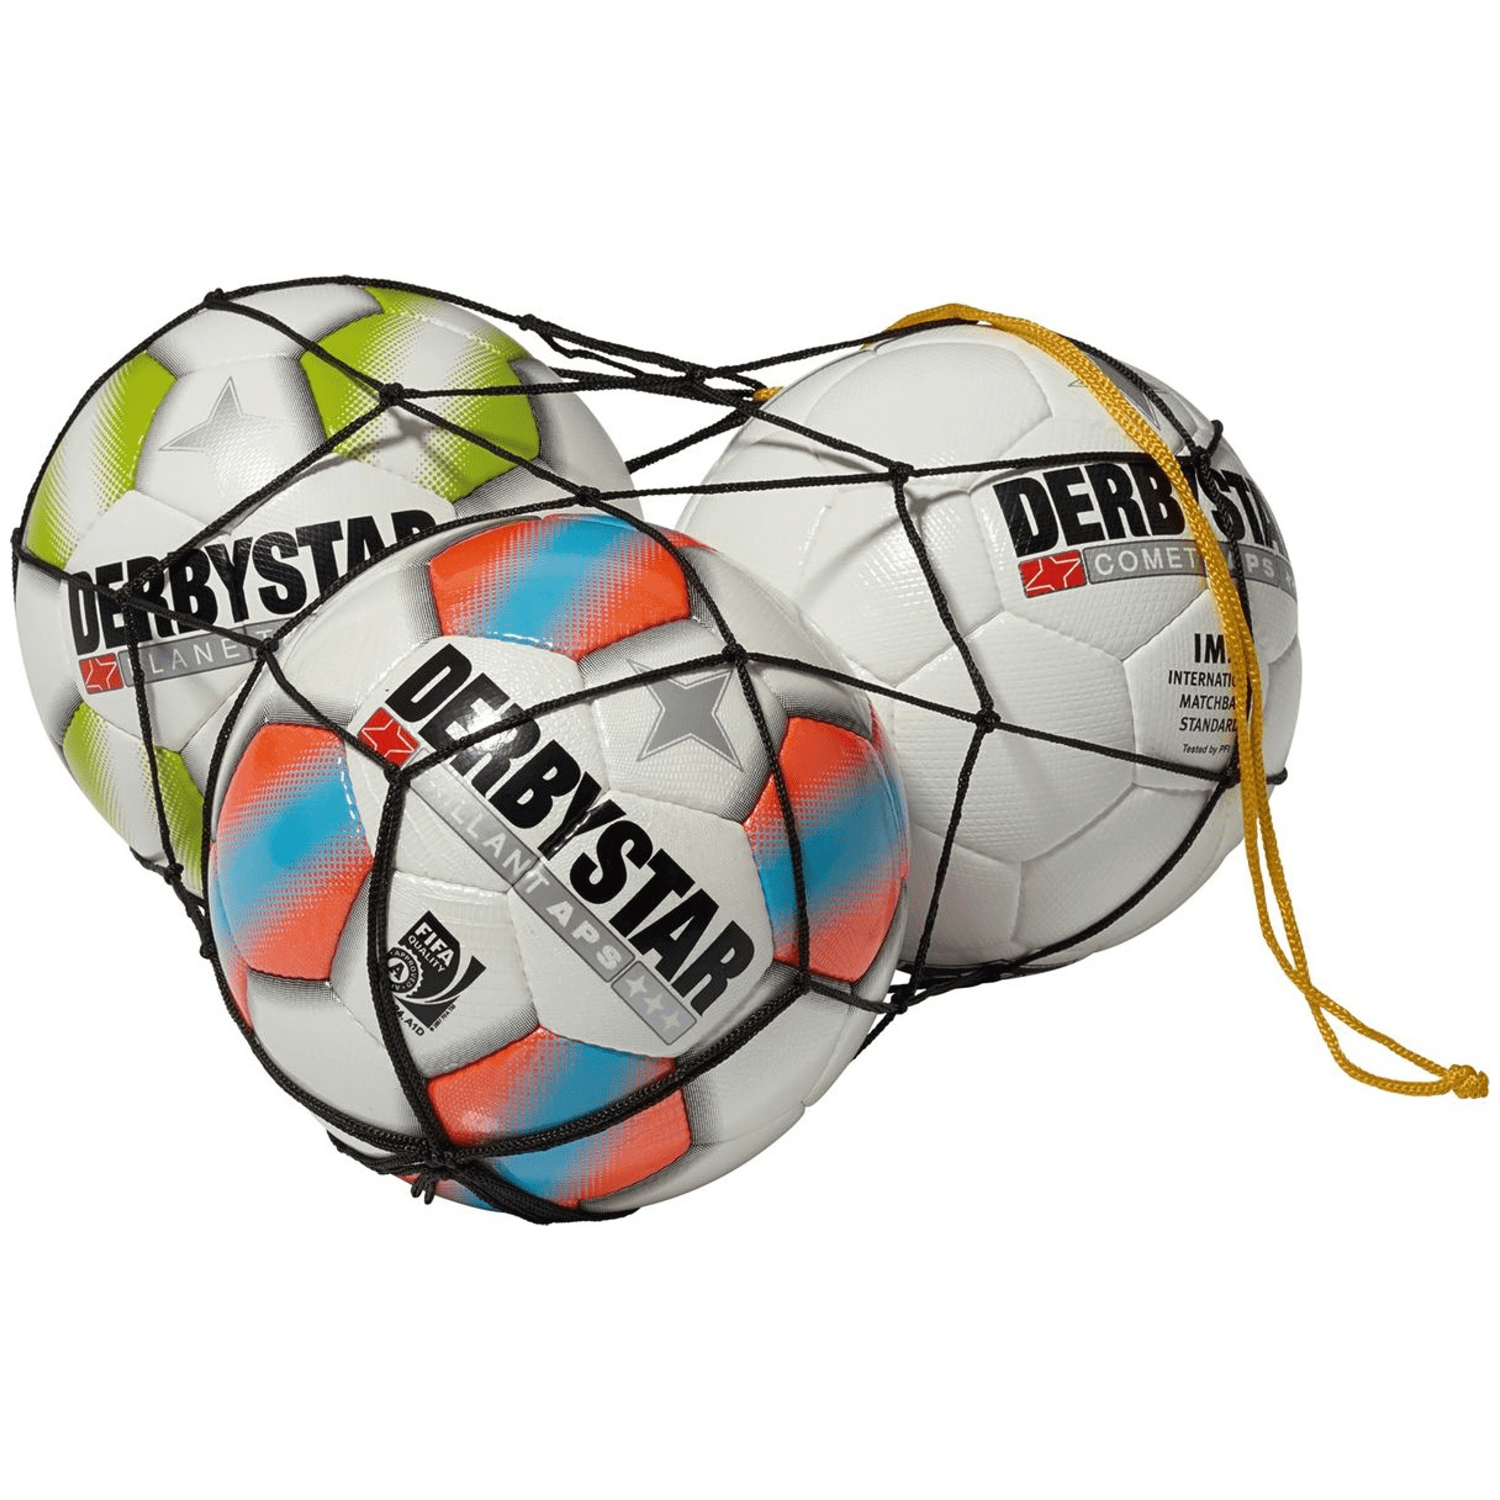 Derbystar Ballnetz Polyester Zubehör